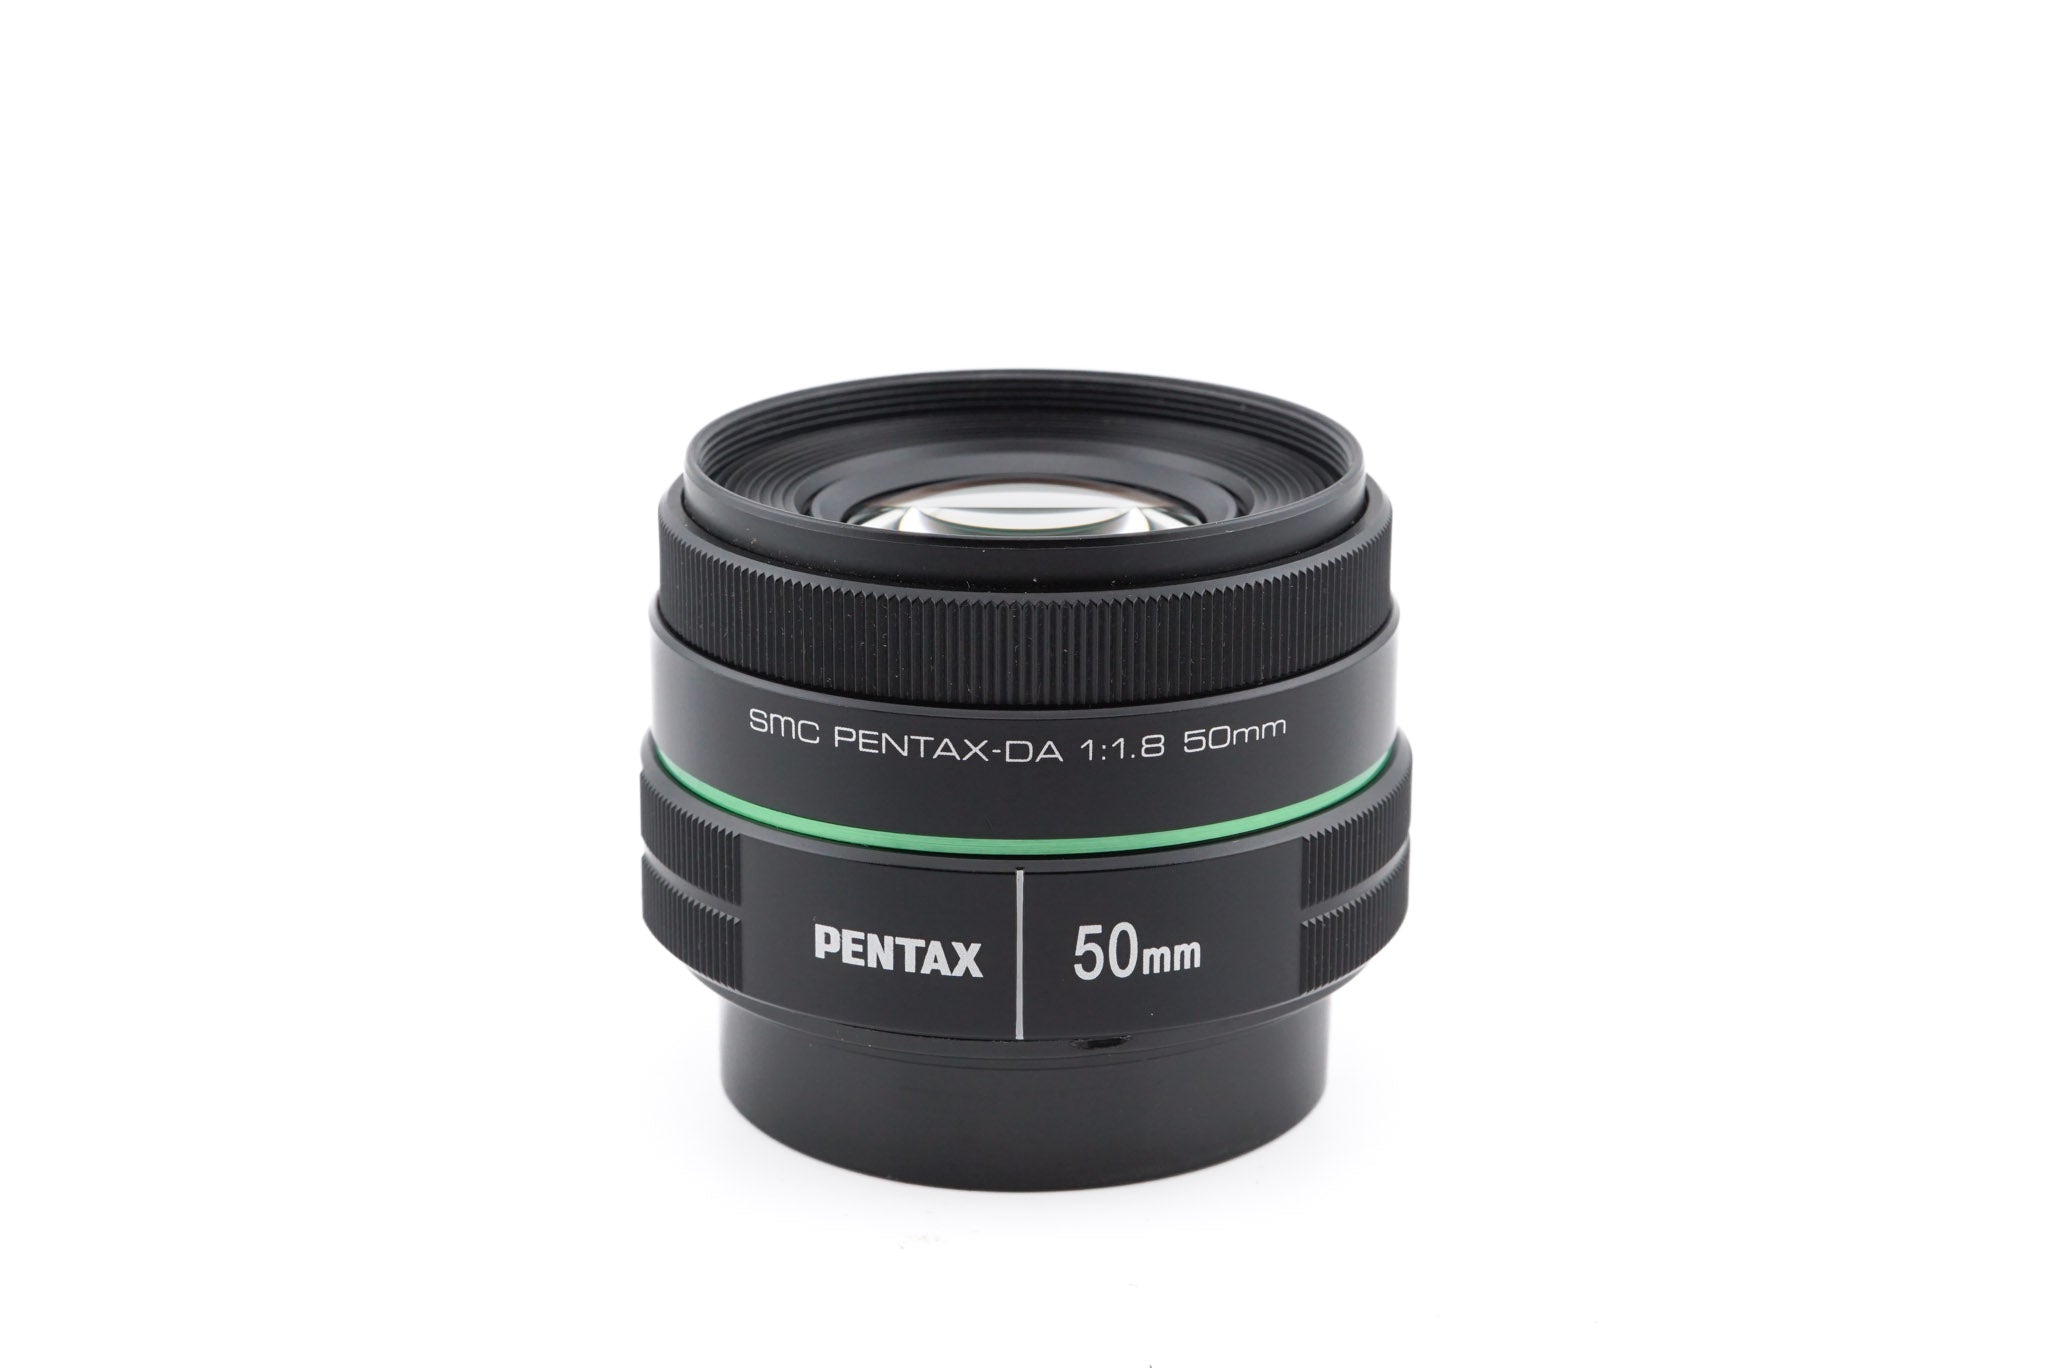 Pentax 50mm f1.8 SMC Pentax-DA - Lens